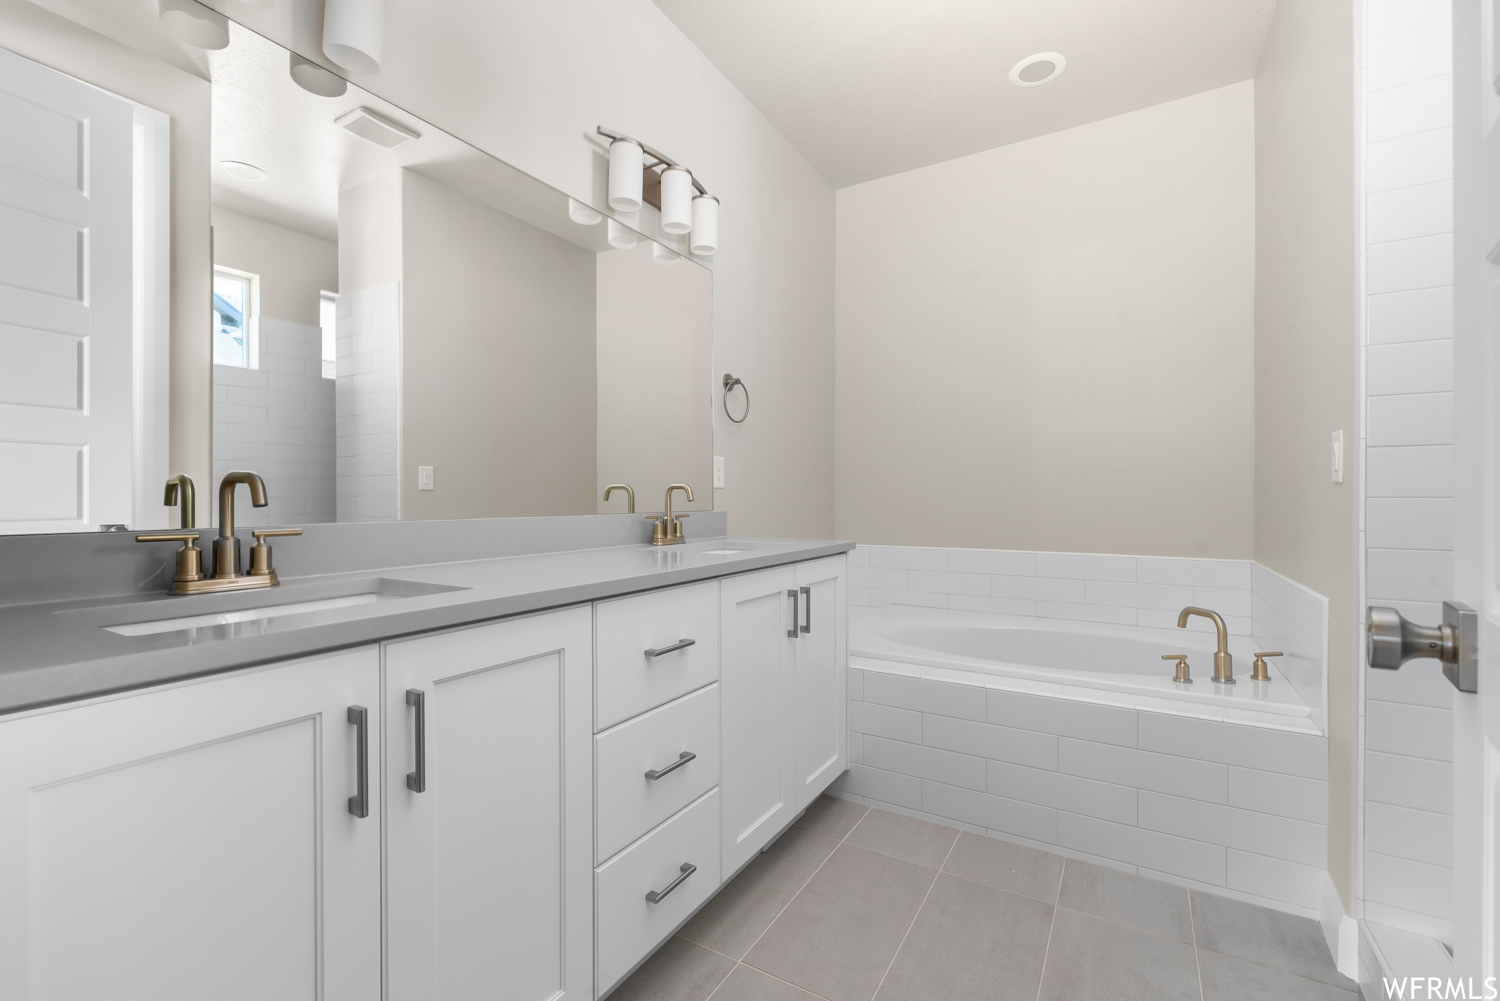 Bathroom featuring tile floors, tiled tub, and double sink vanity